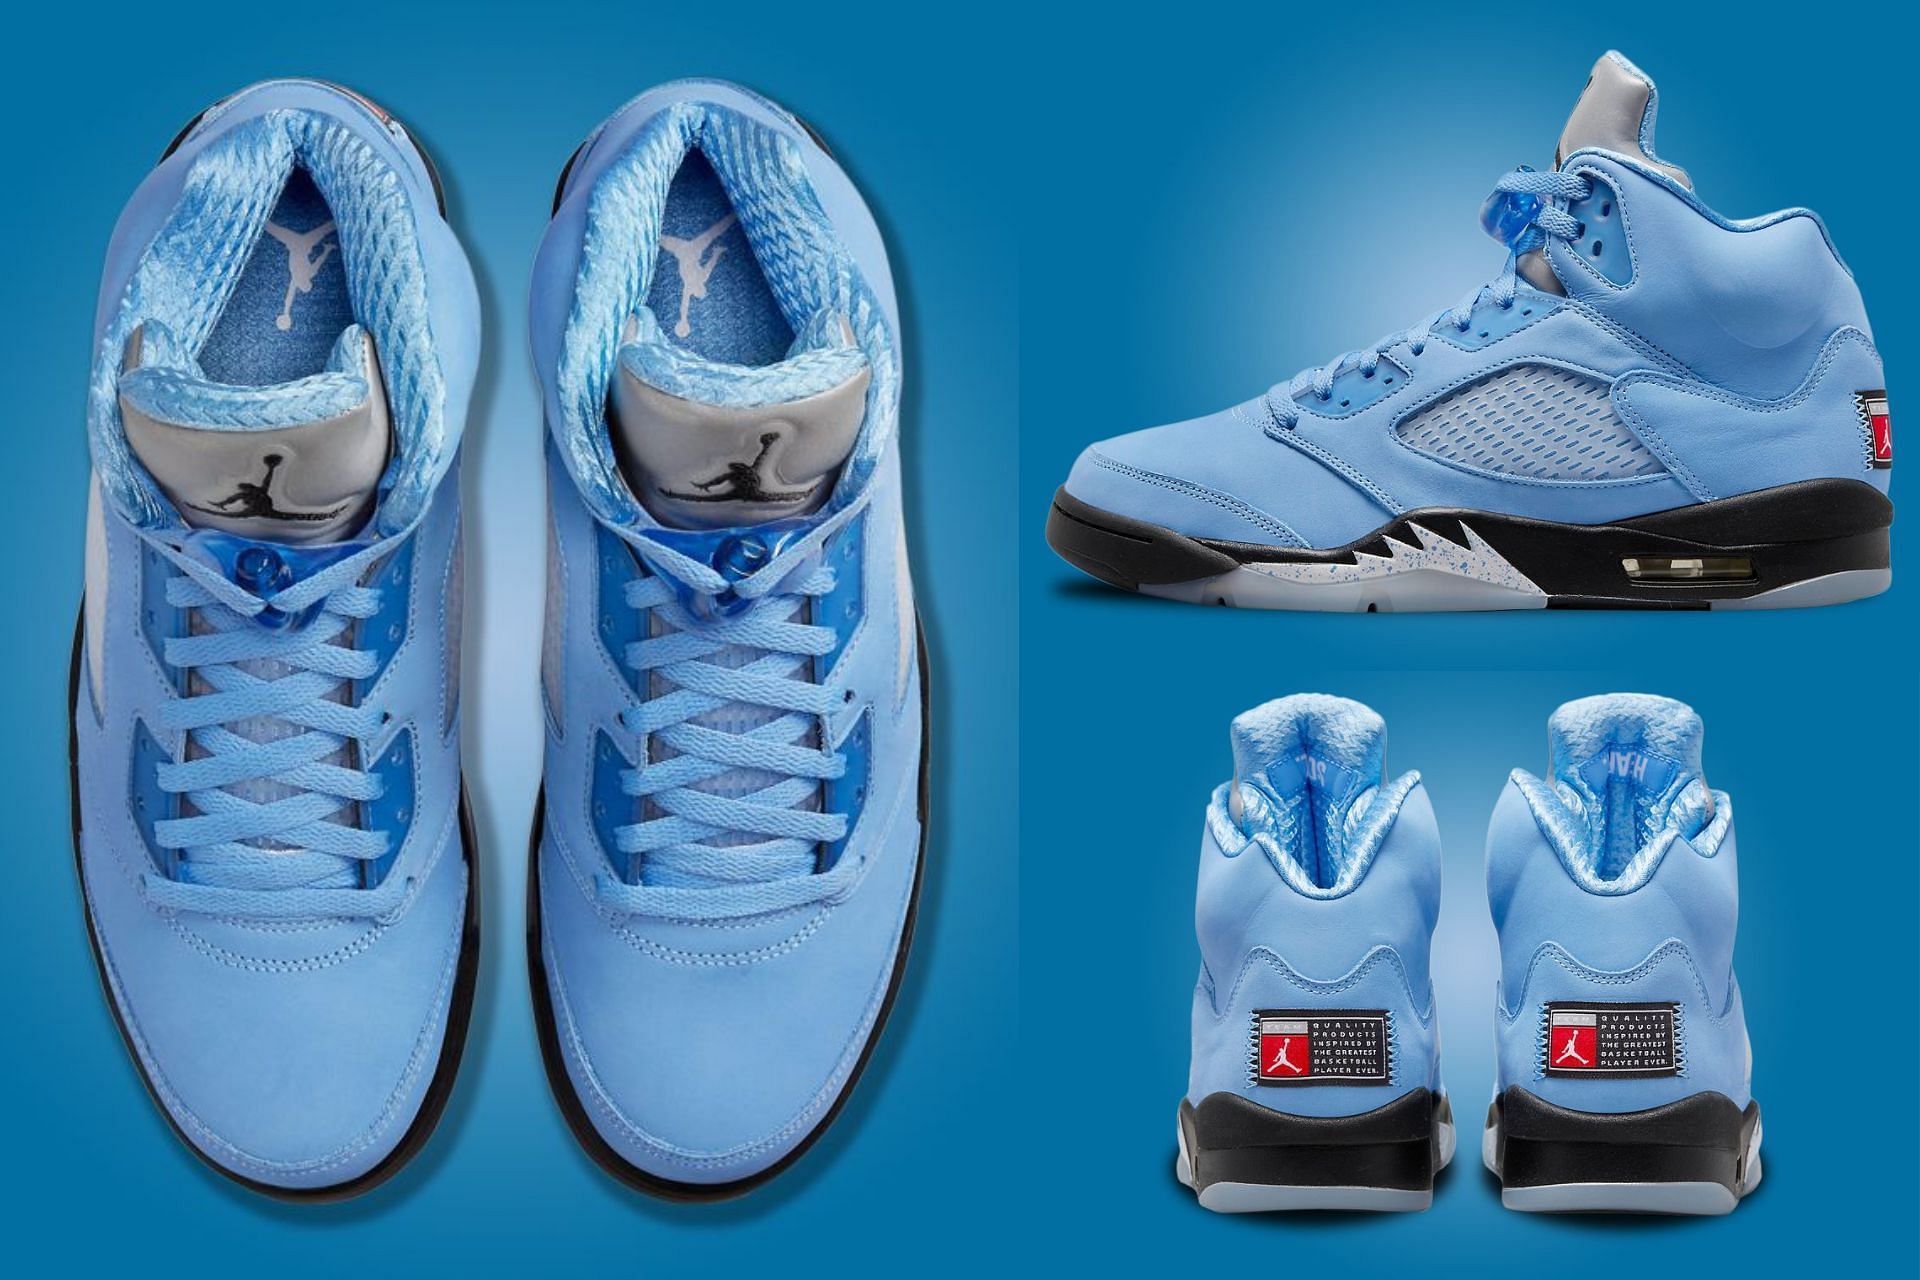 Take a closer look at the upcoming Air Jordan 5 shoes (Image via Sportskeeda)